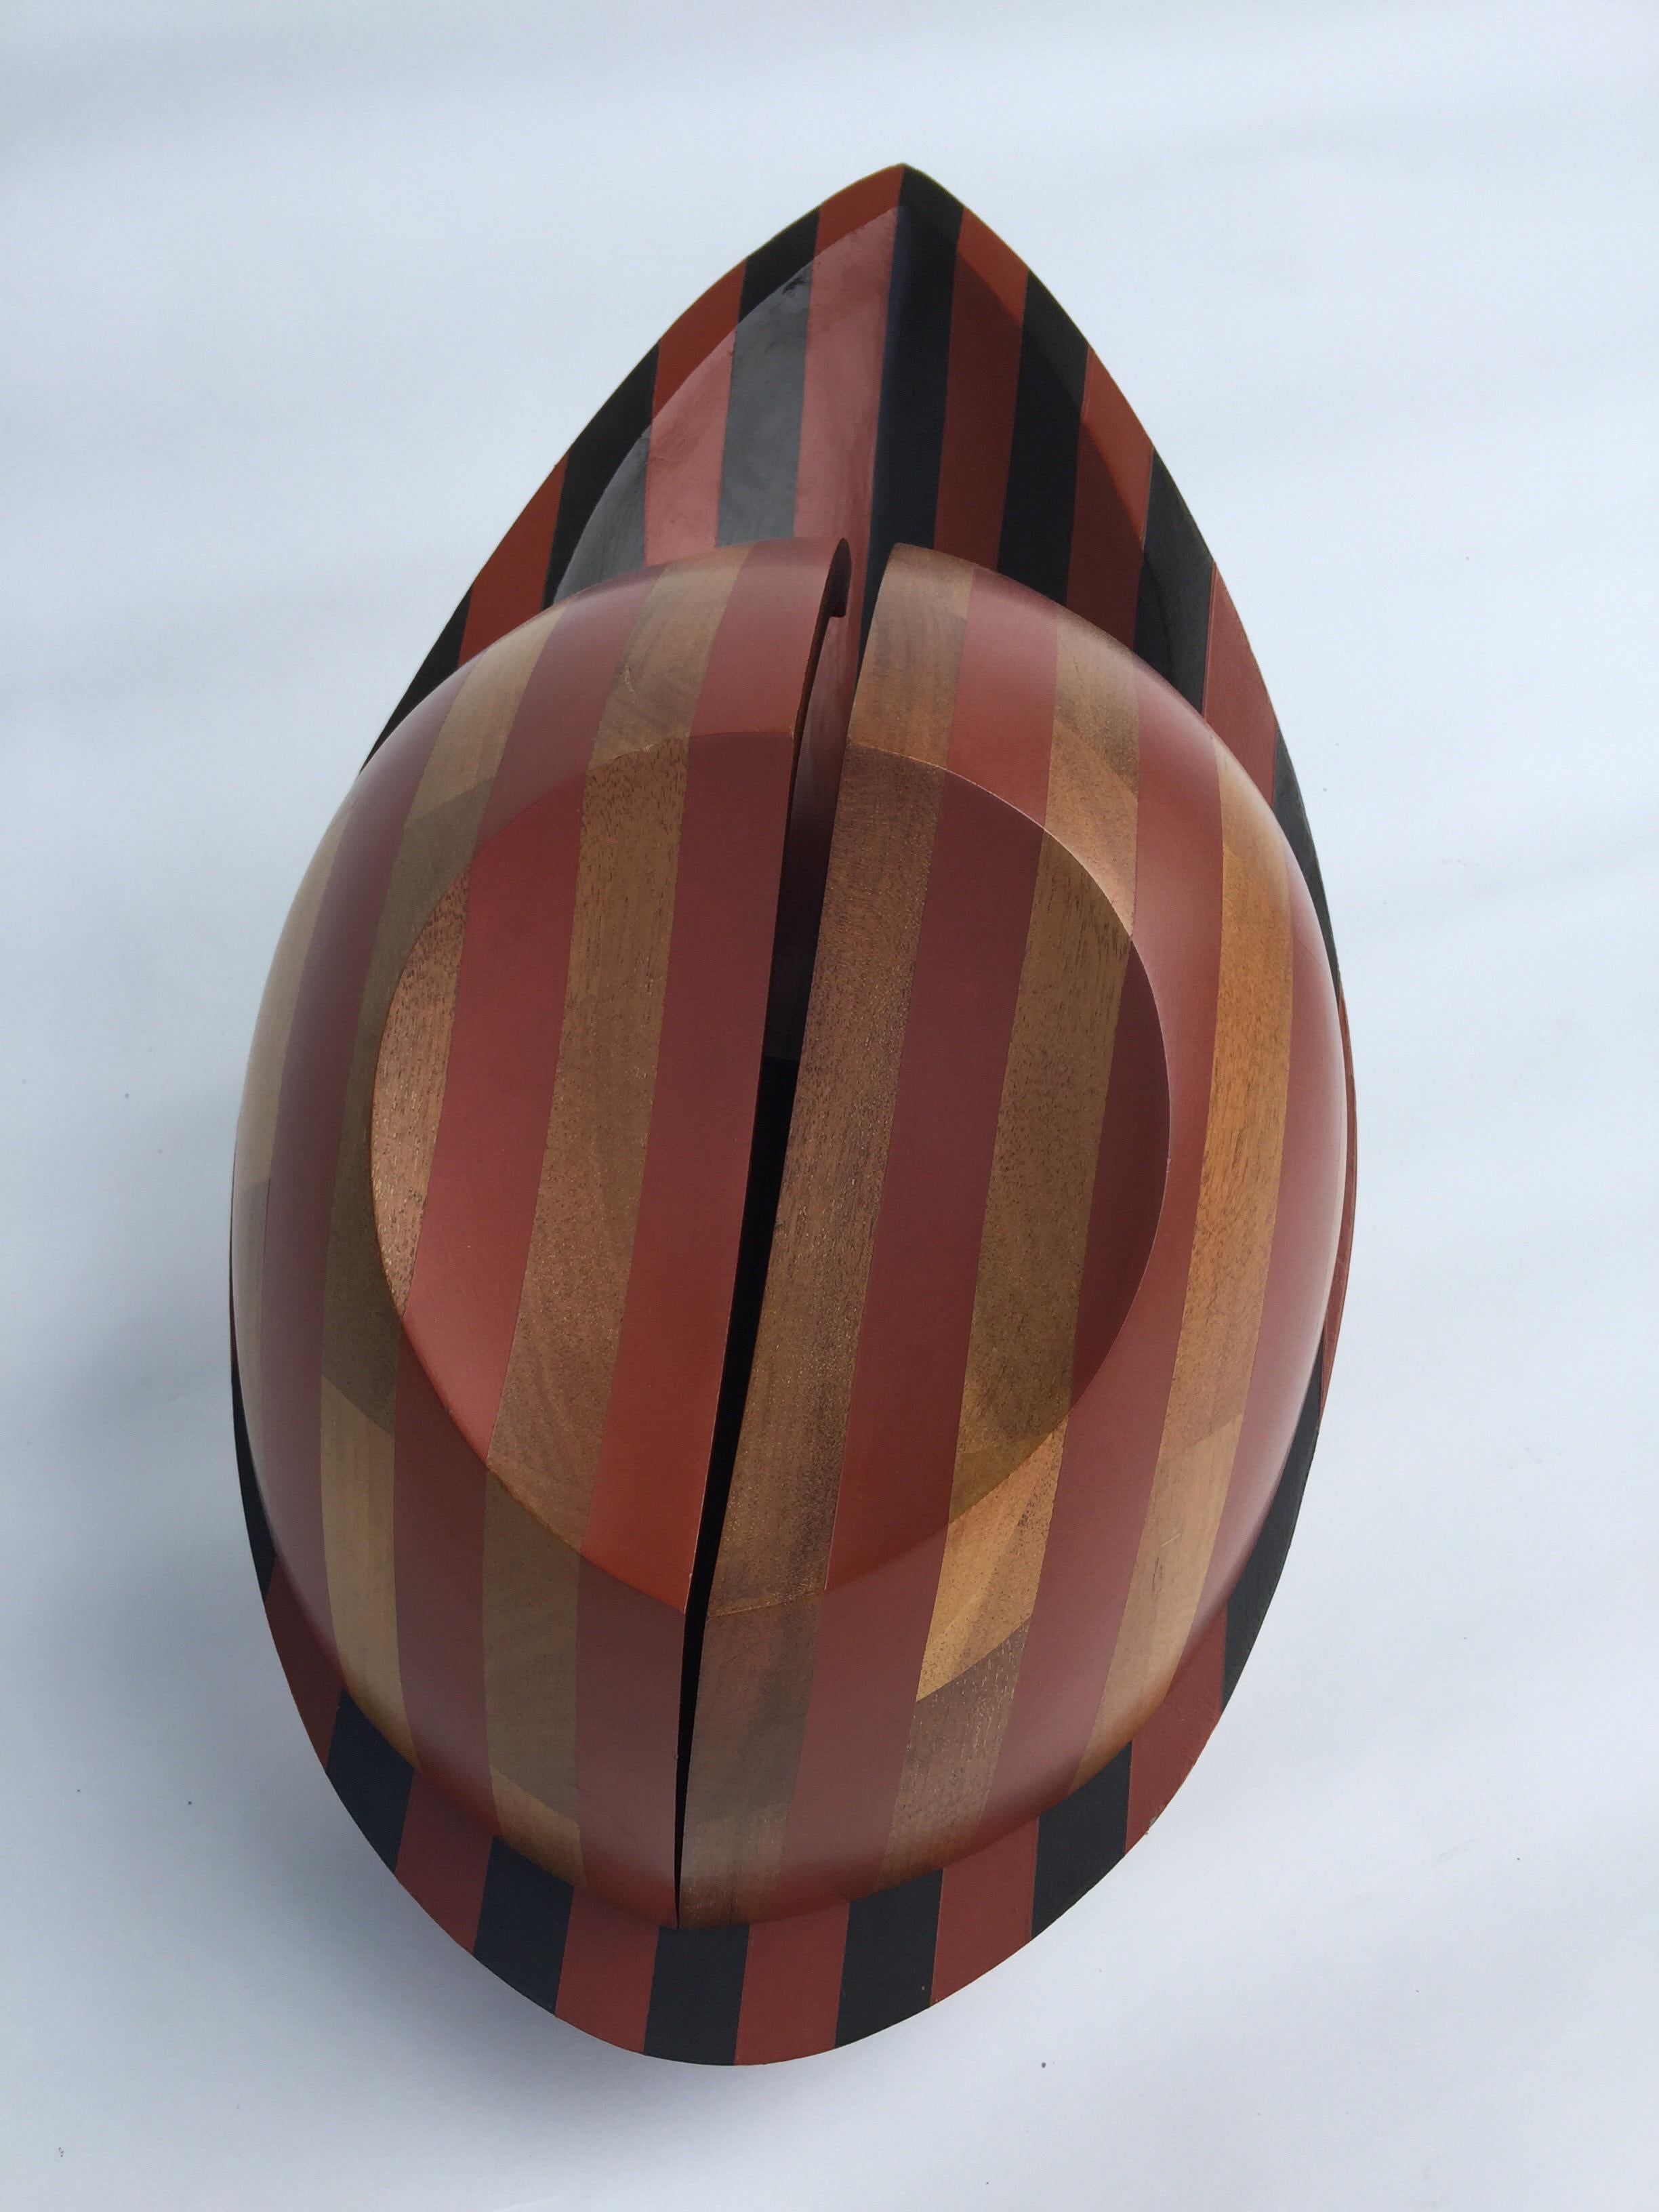 North American David E. Davis Organic Form Wooden Egg Sculpture